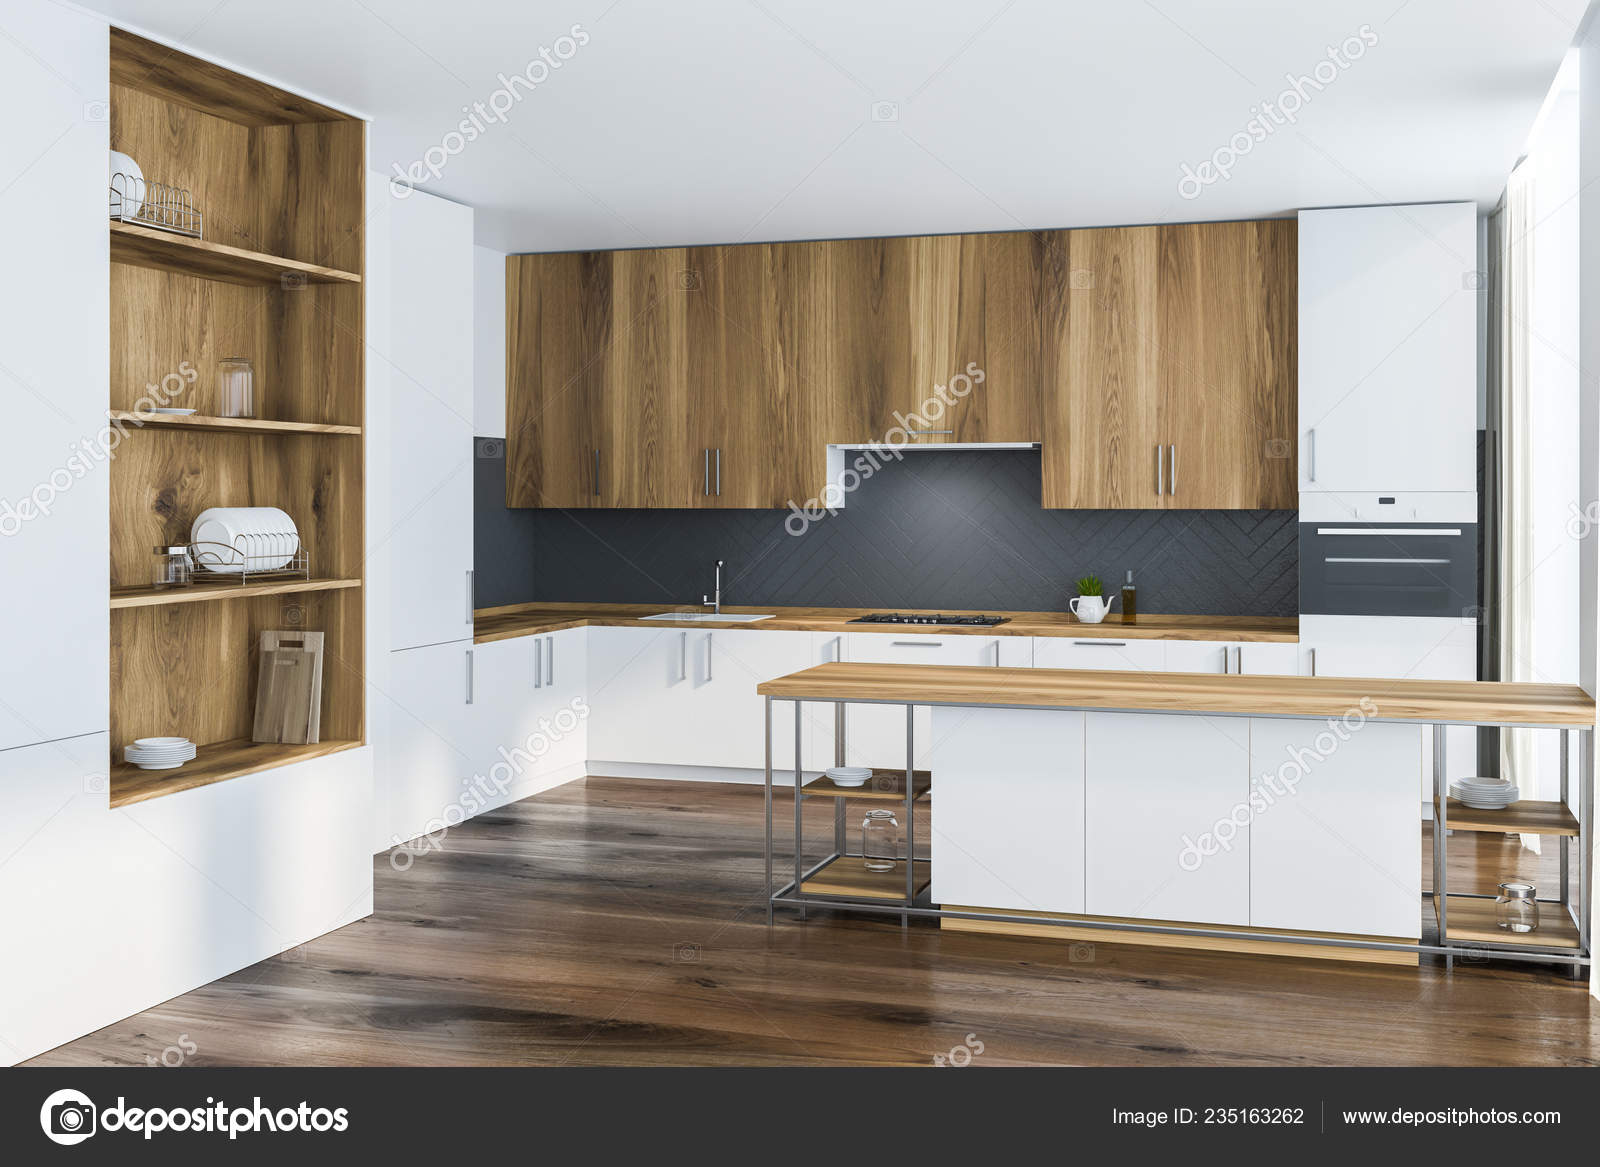 https://st4.depositphotos.com/2673929/23516/i/1600/depositphotos_235163262-stock-photo-corner-kitchen-white-gray-walls.jpg